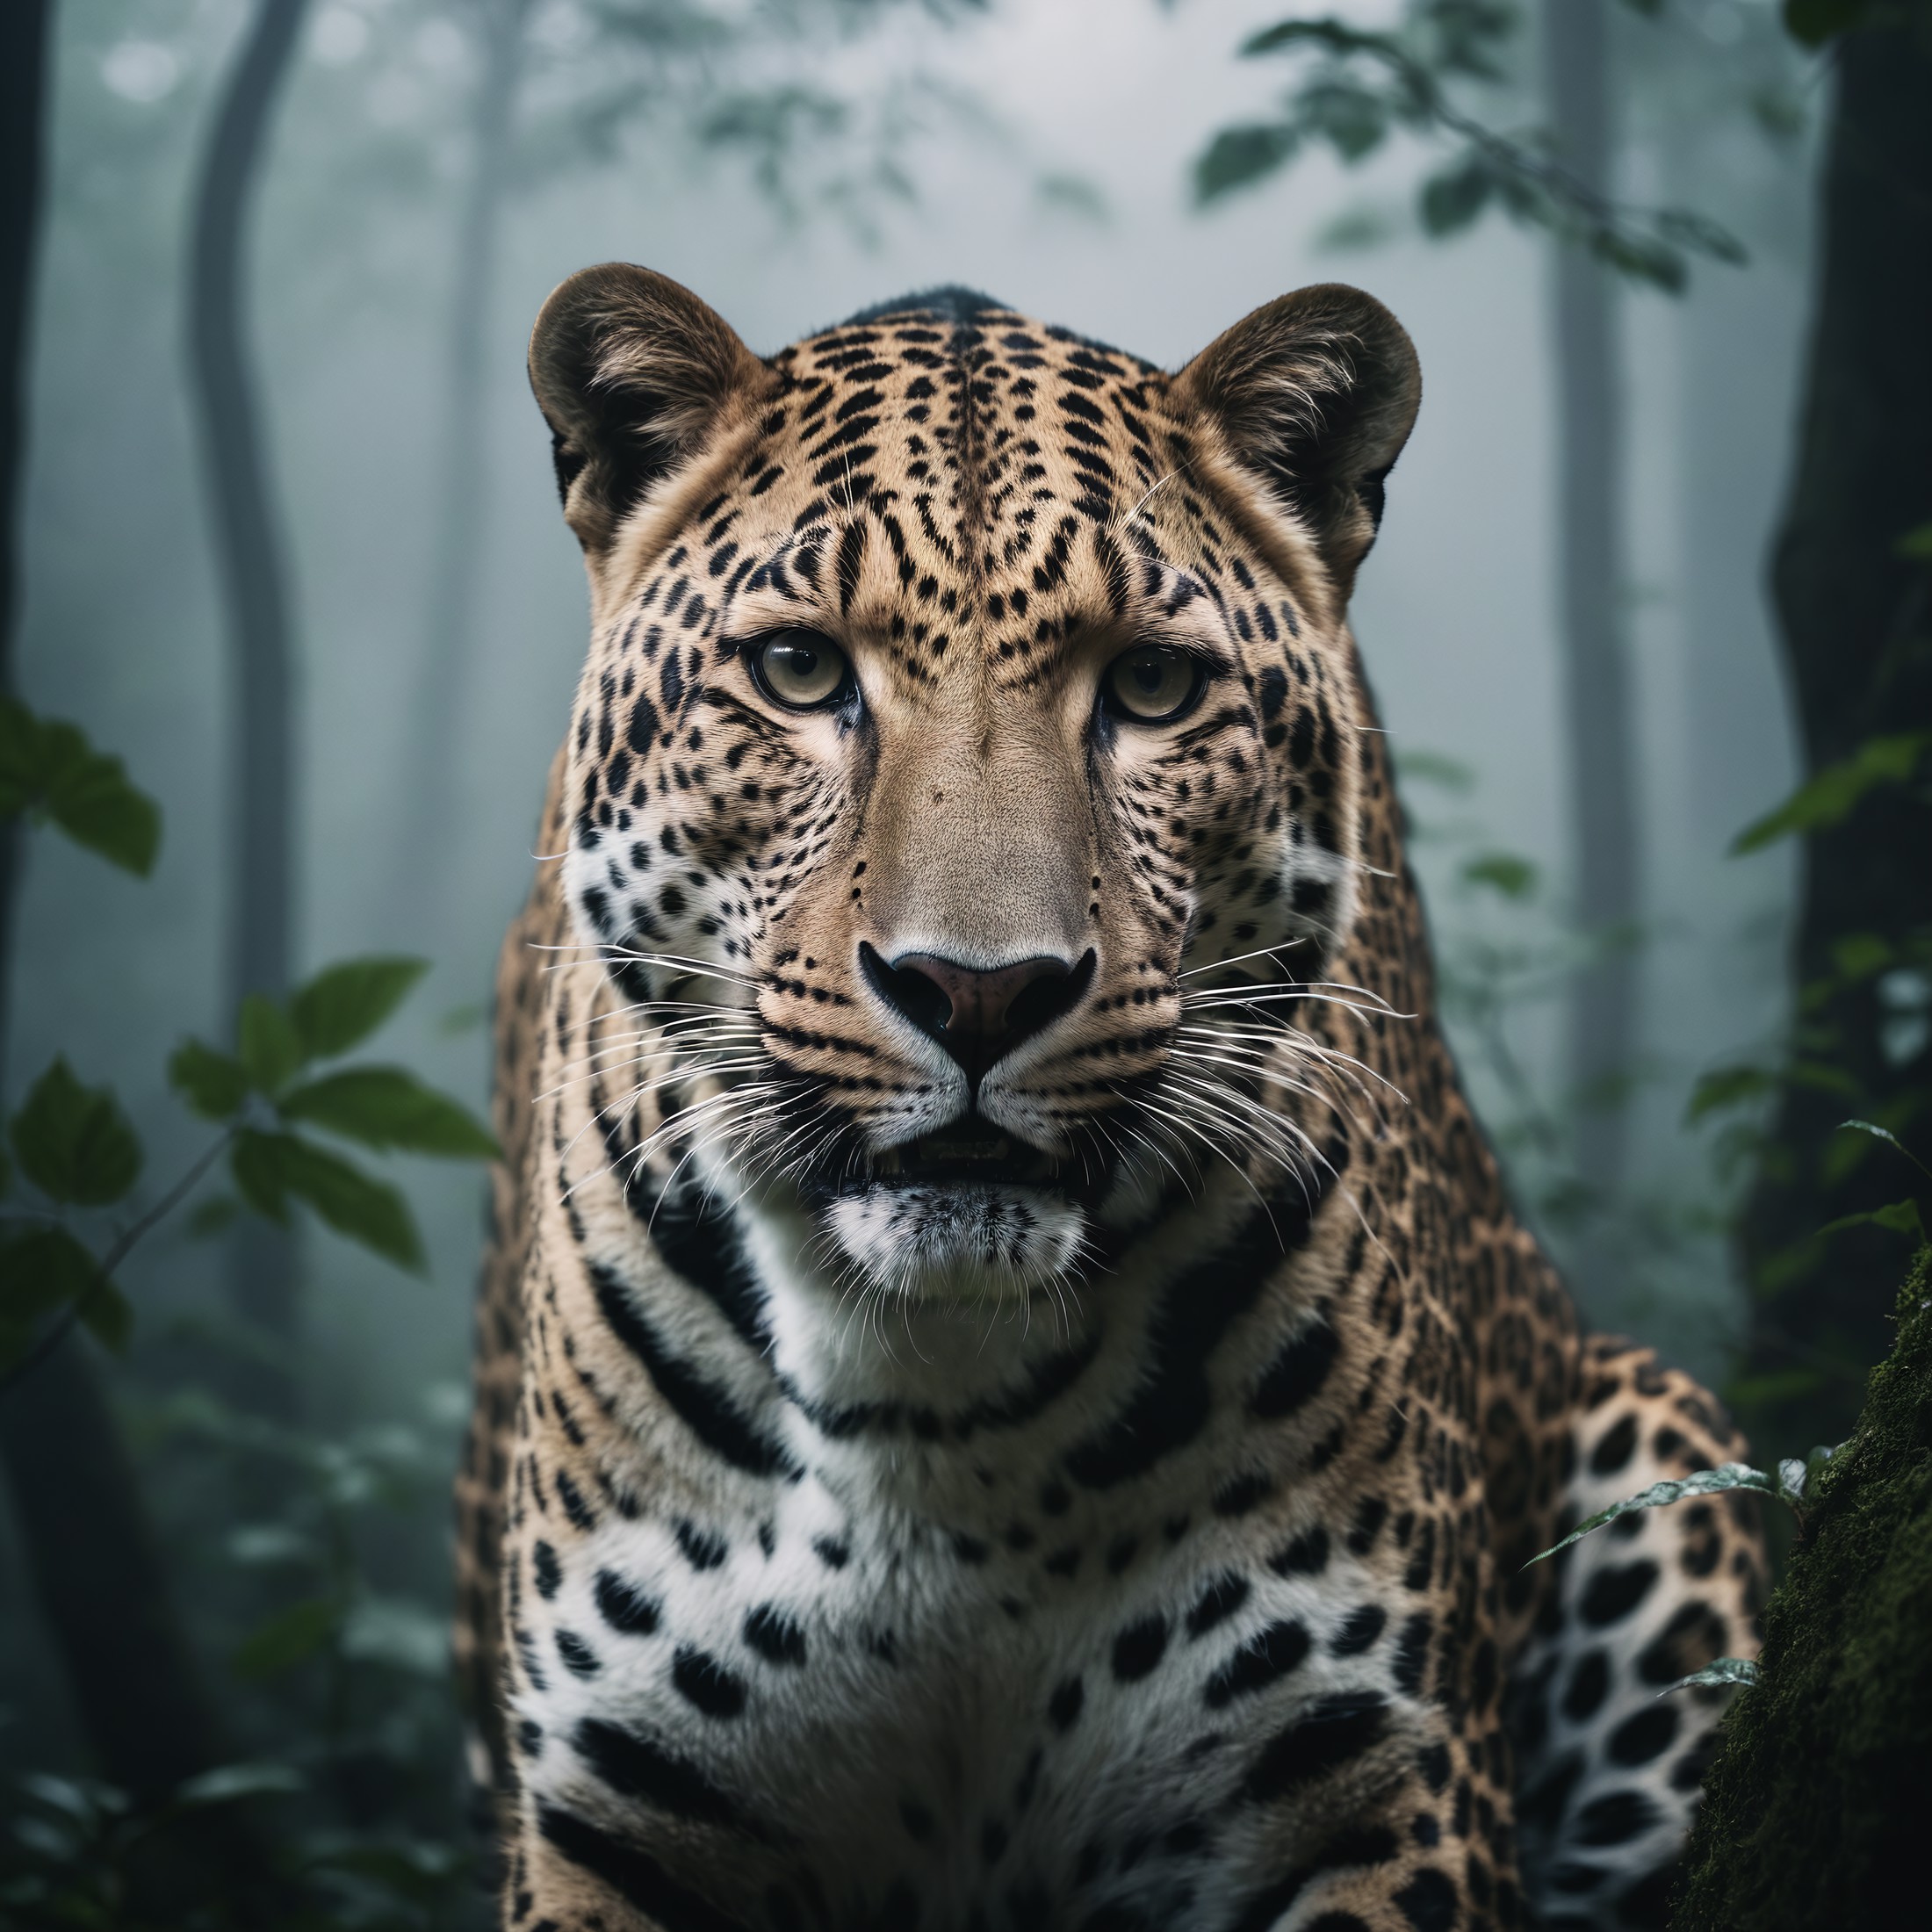 breathtaking 135mm IMAX cinematic shot, award winning wildlife medium shot, close-up action shot of a gigantic majestic le...